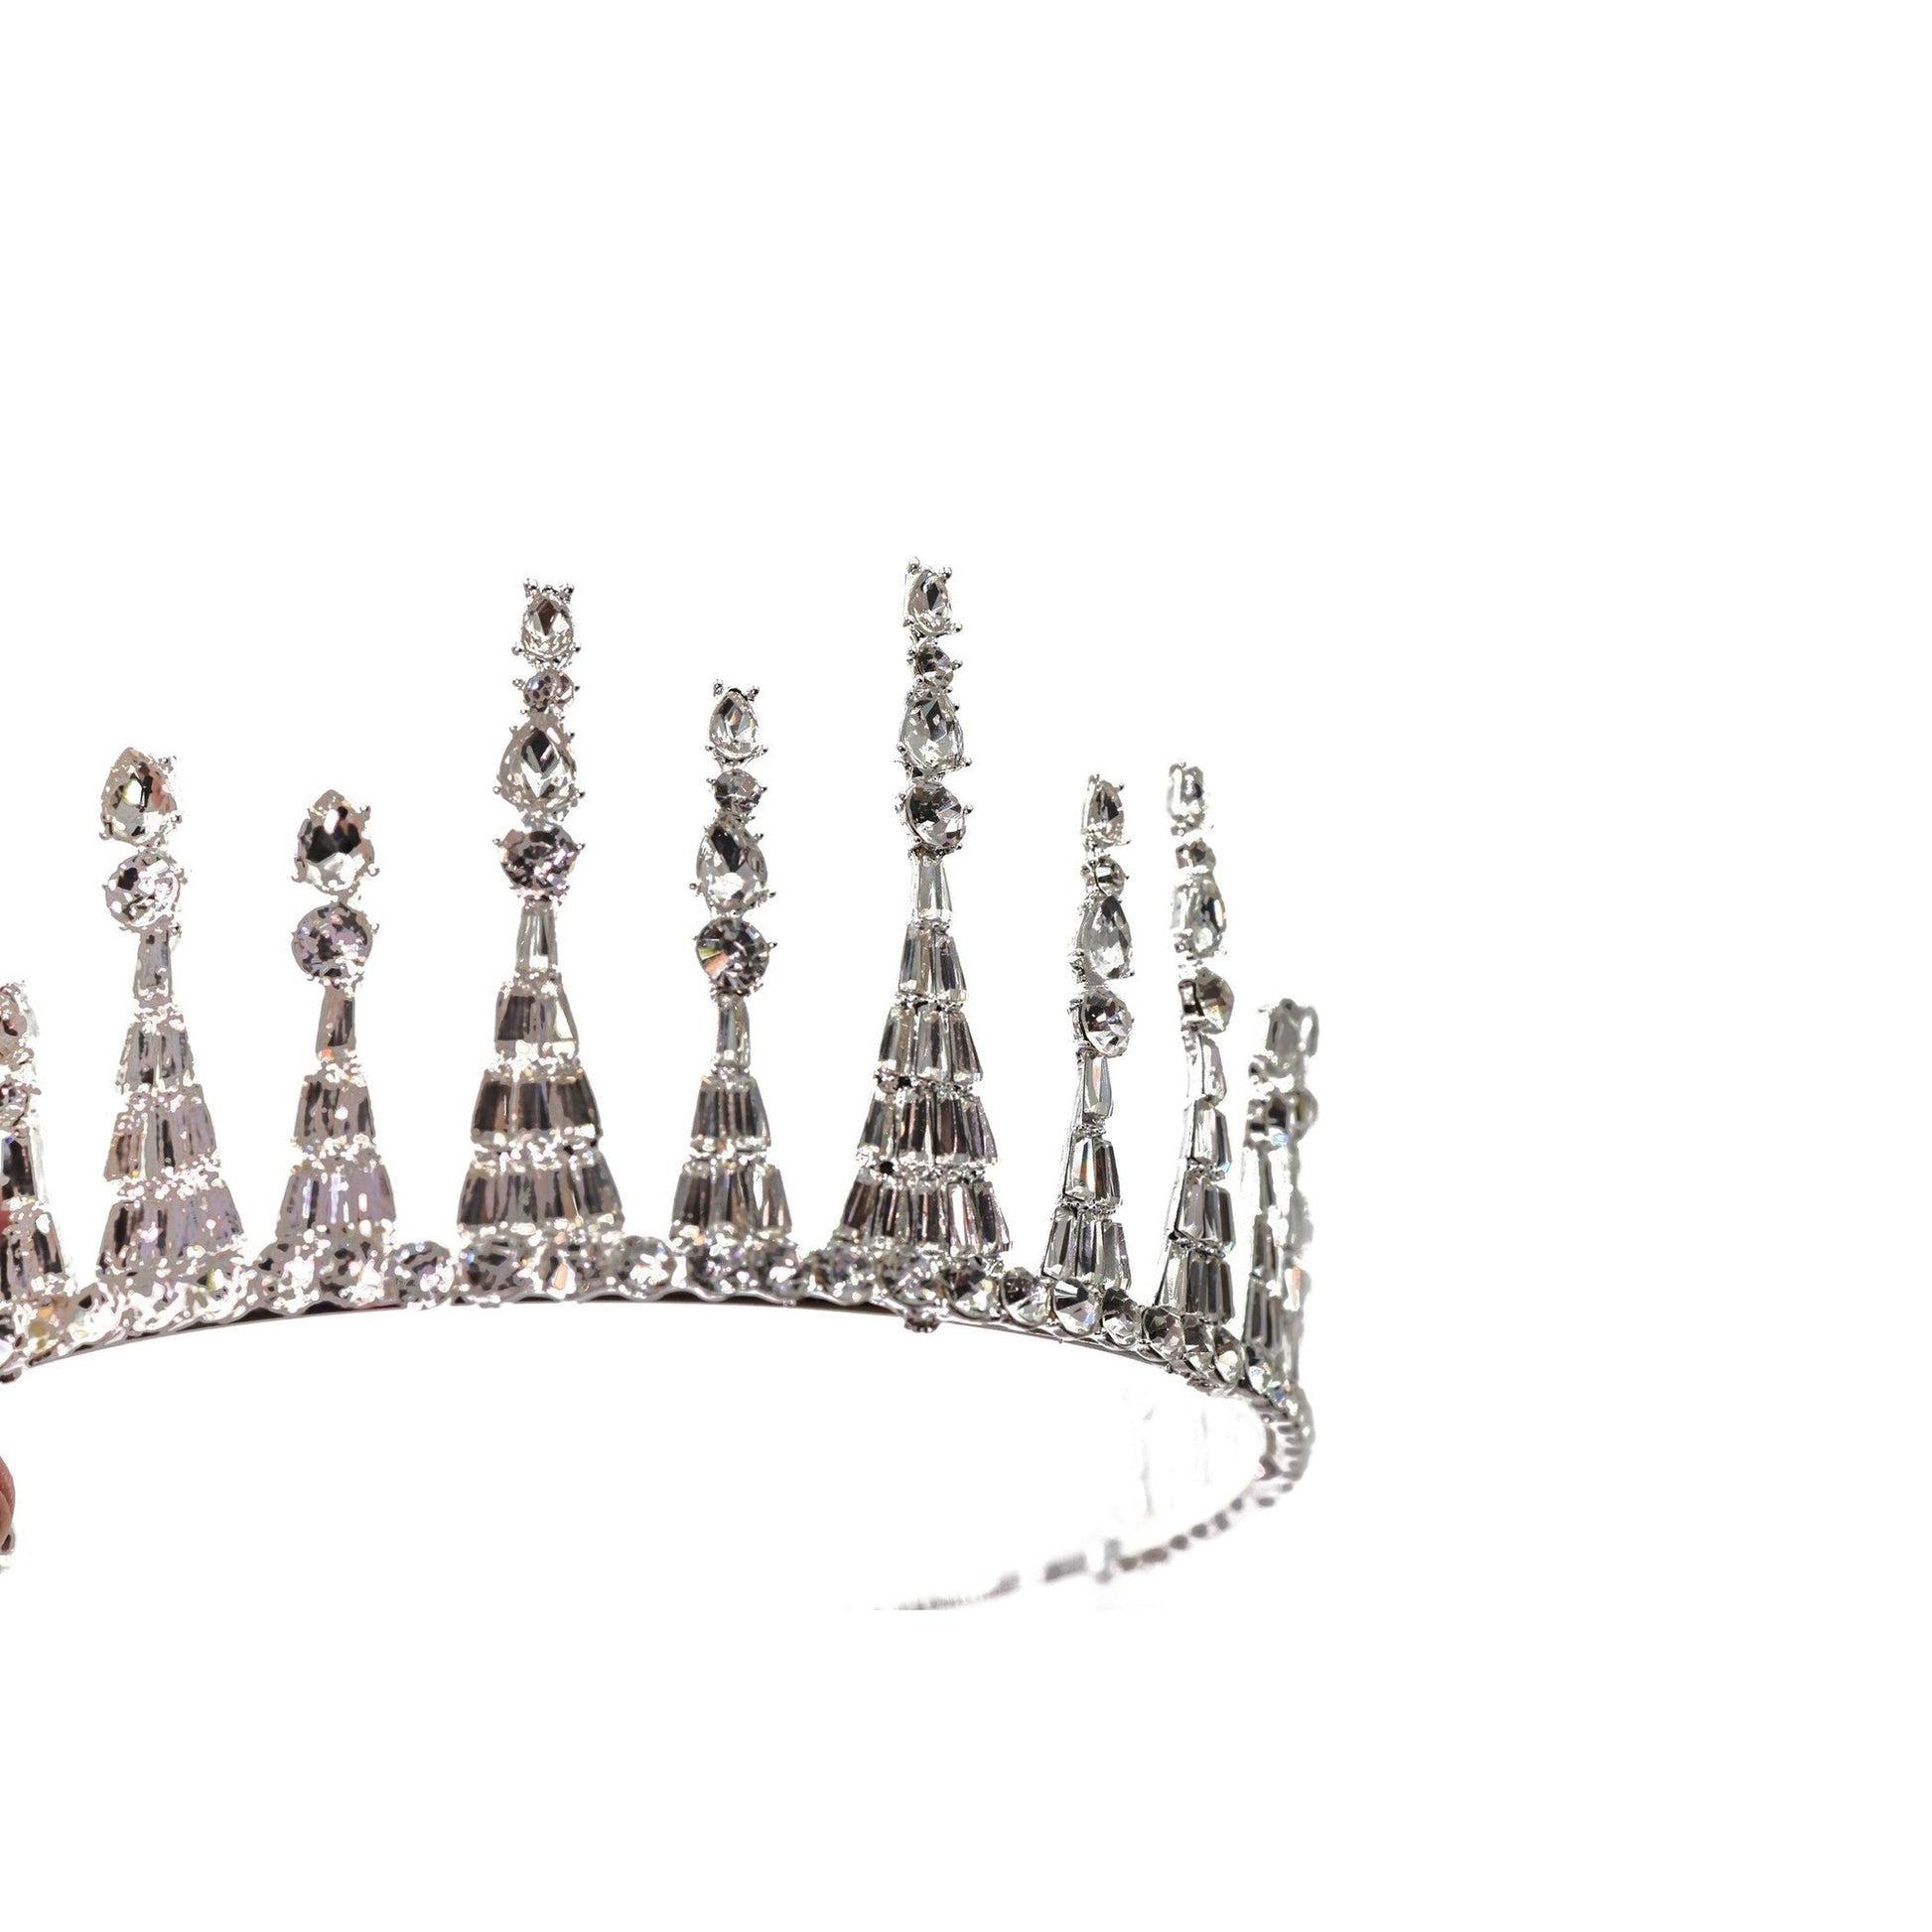 Jazz Age Skyscraper Tiara in Silver | Royalty Crown Bridal Hair Accessory